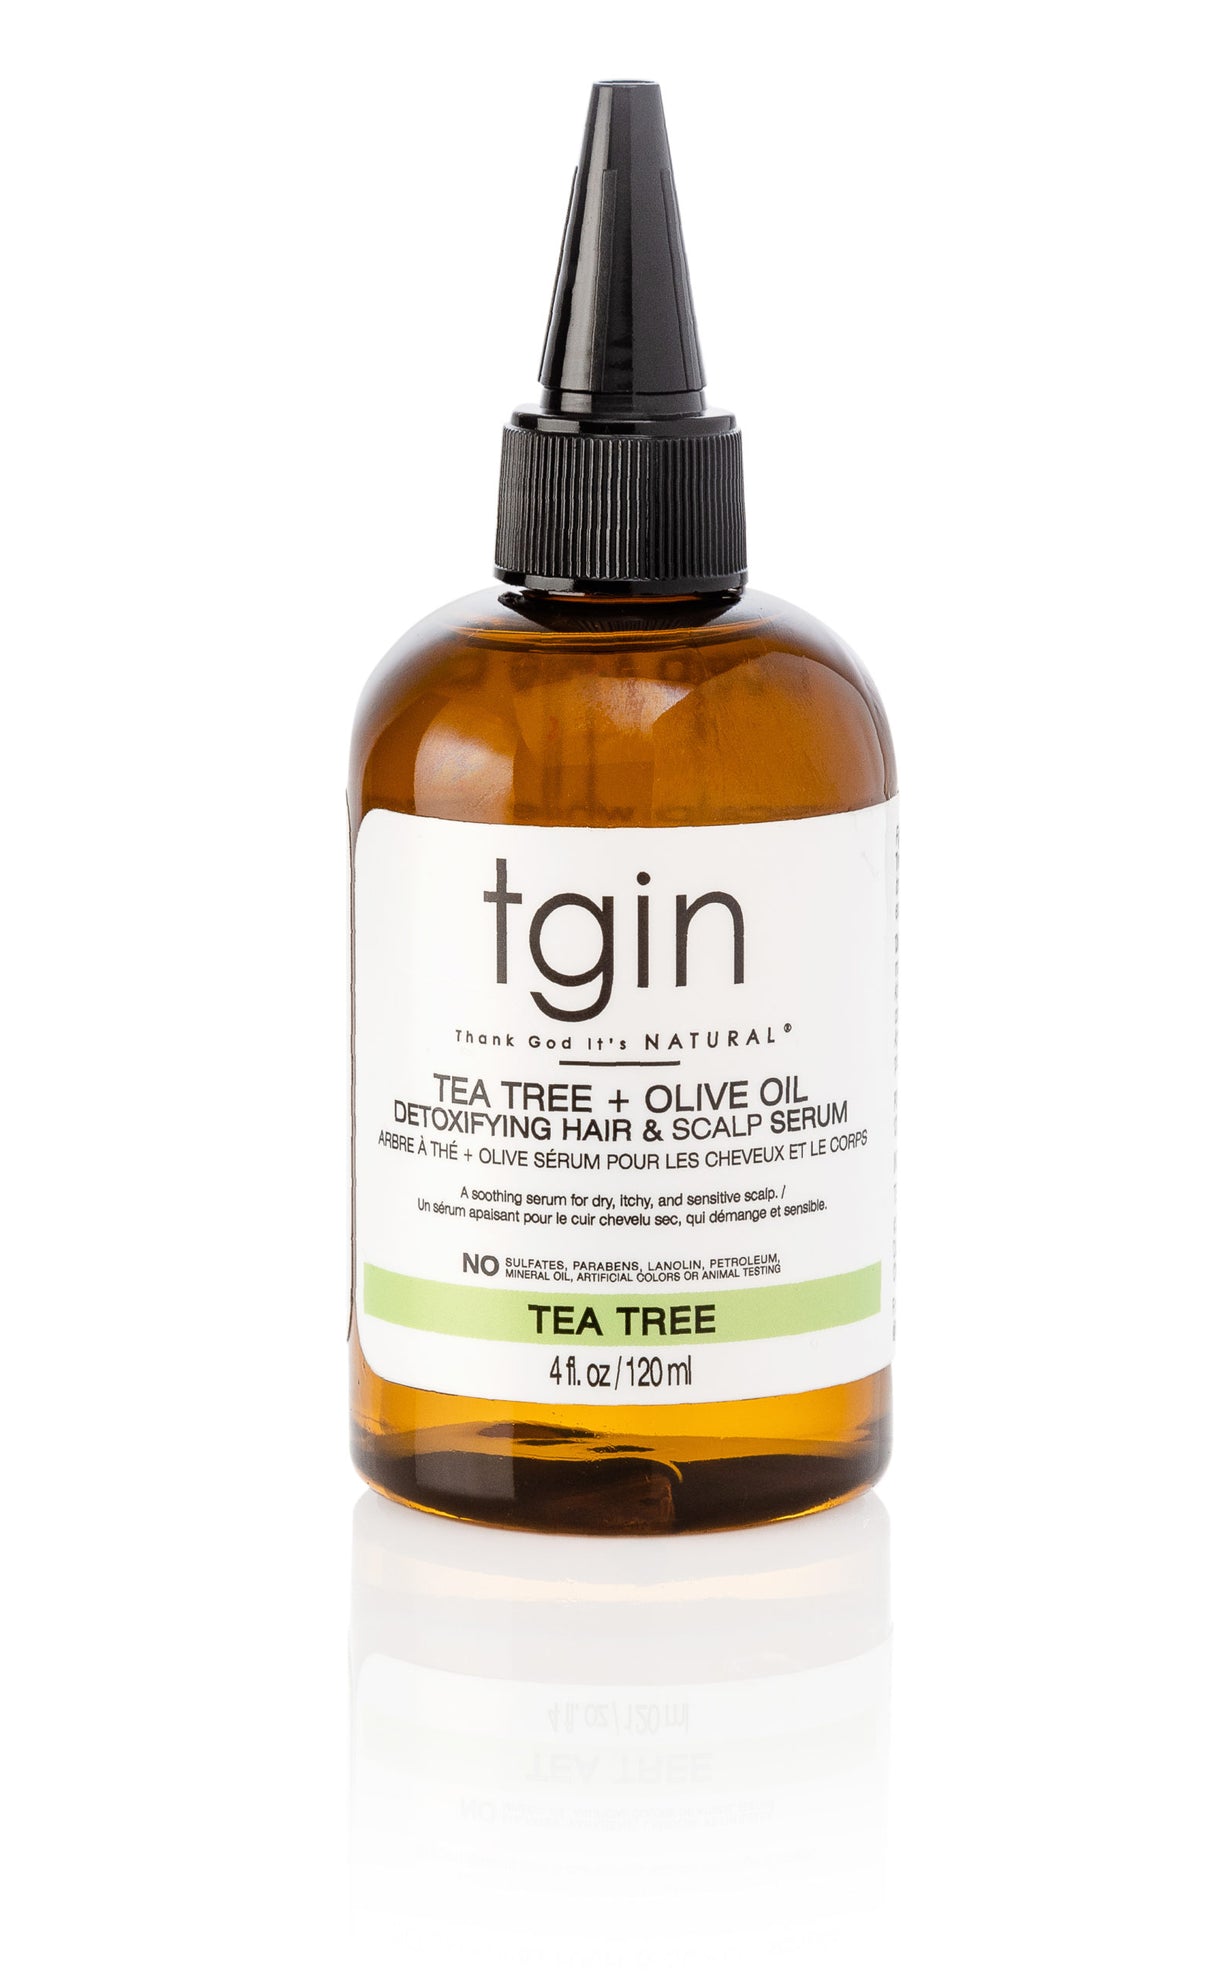 tgin® Tea Tree Detoxifying Hair & Scalp Serum -4 oz